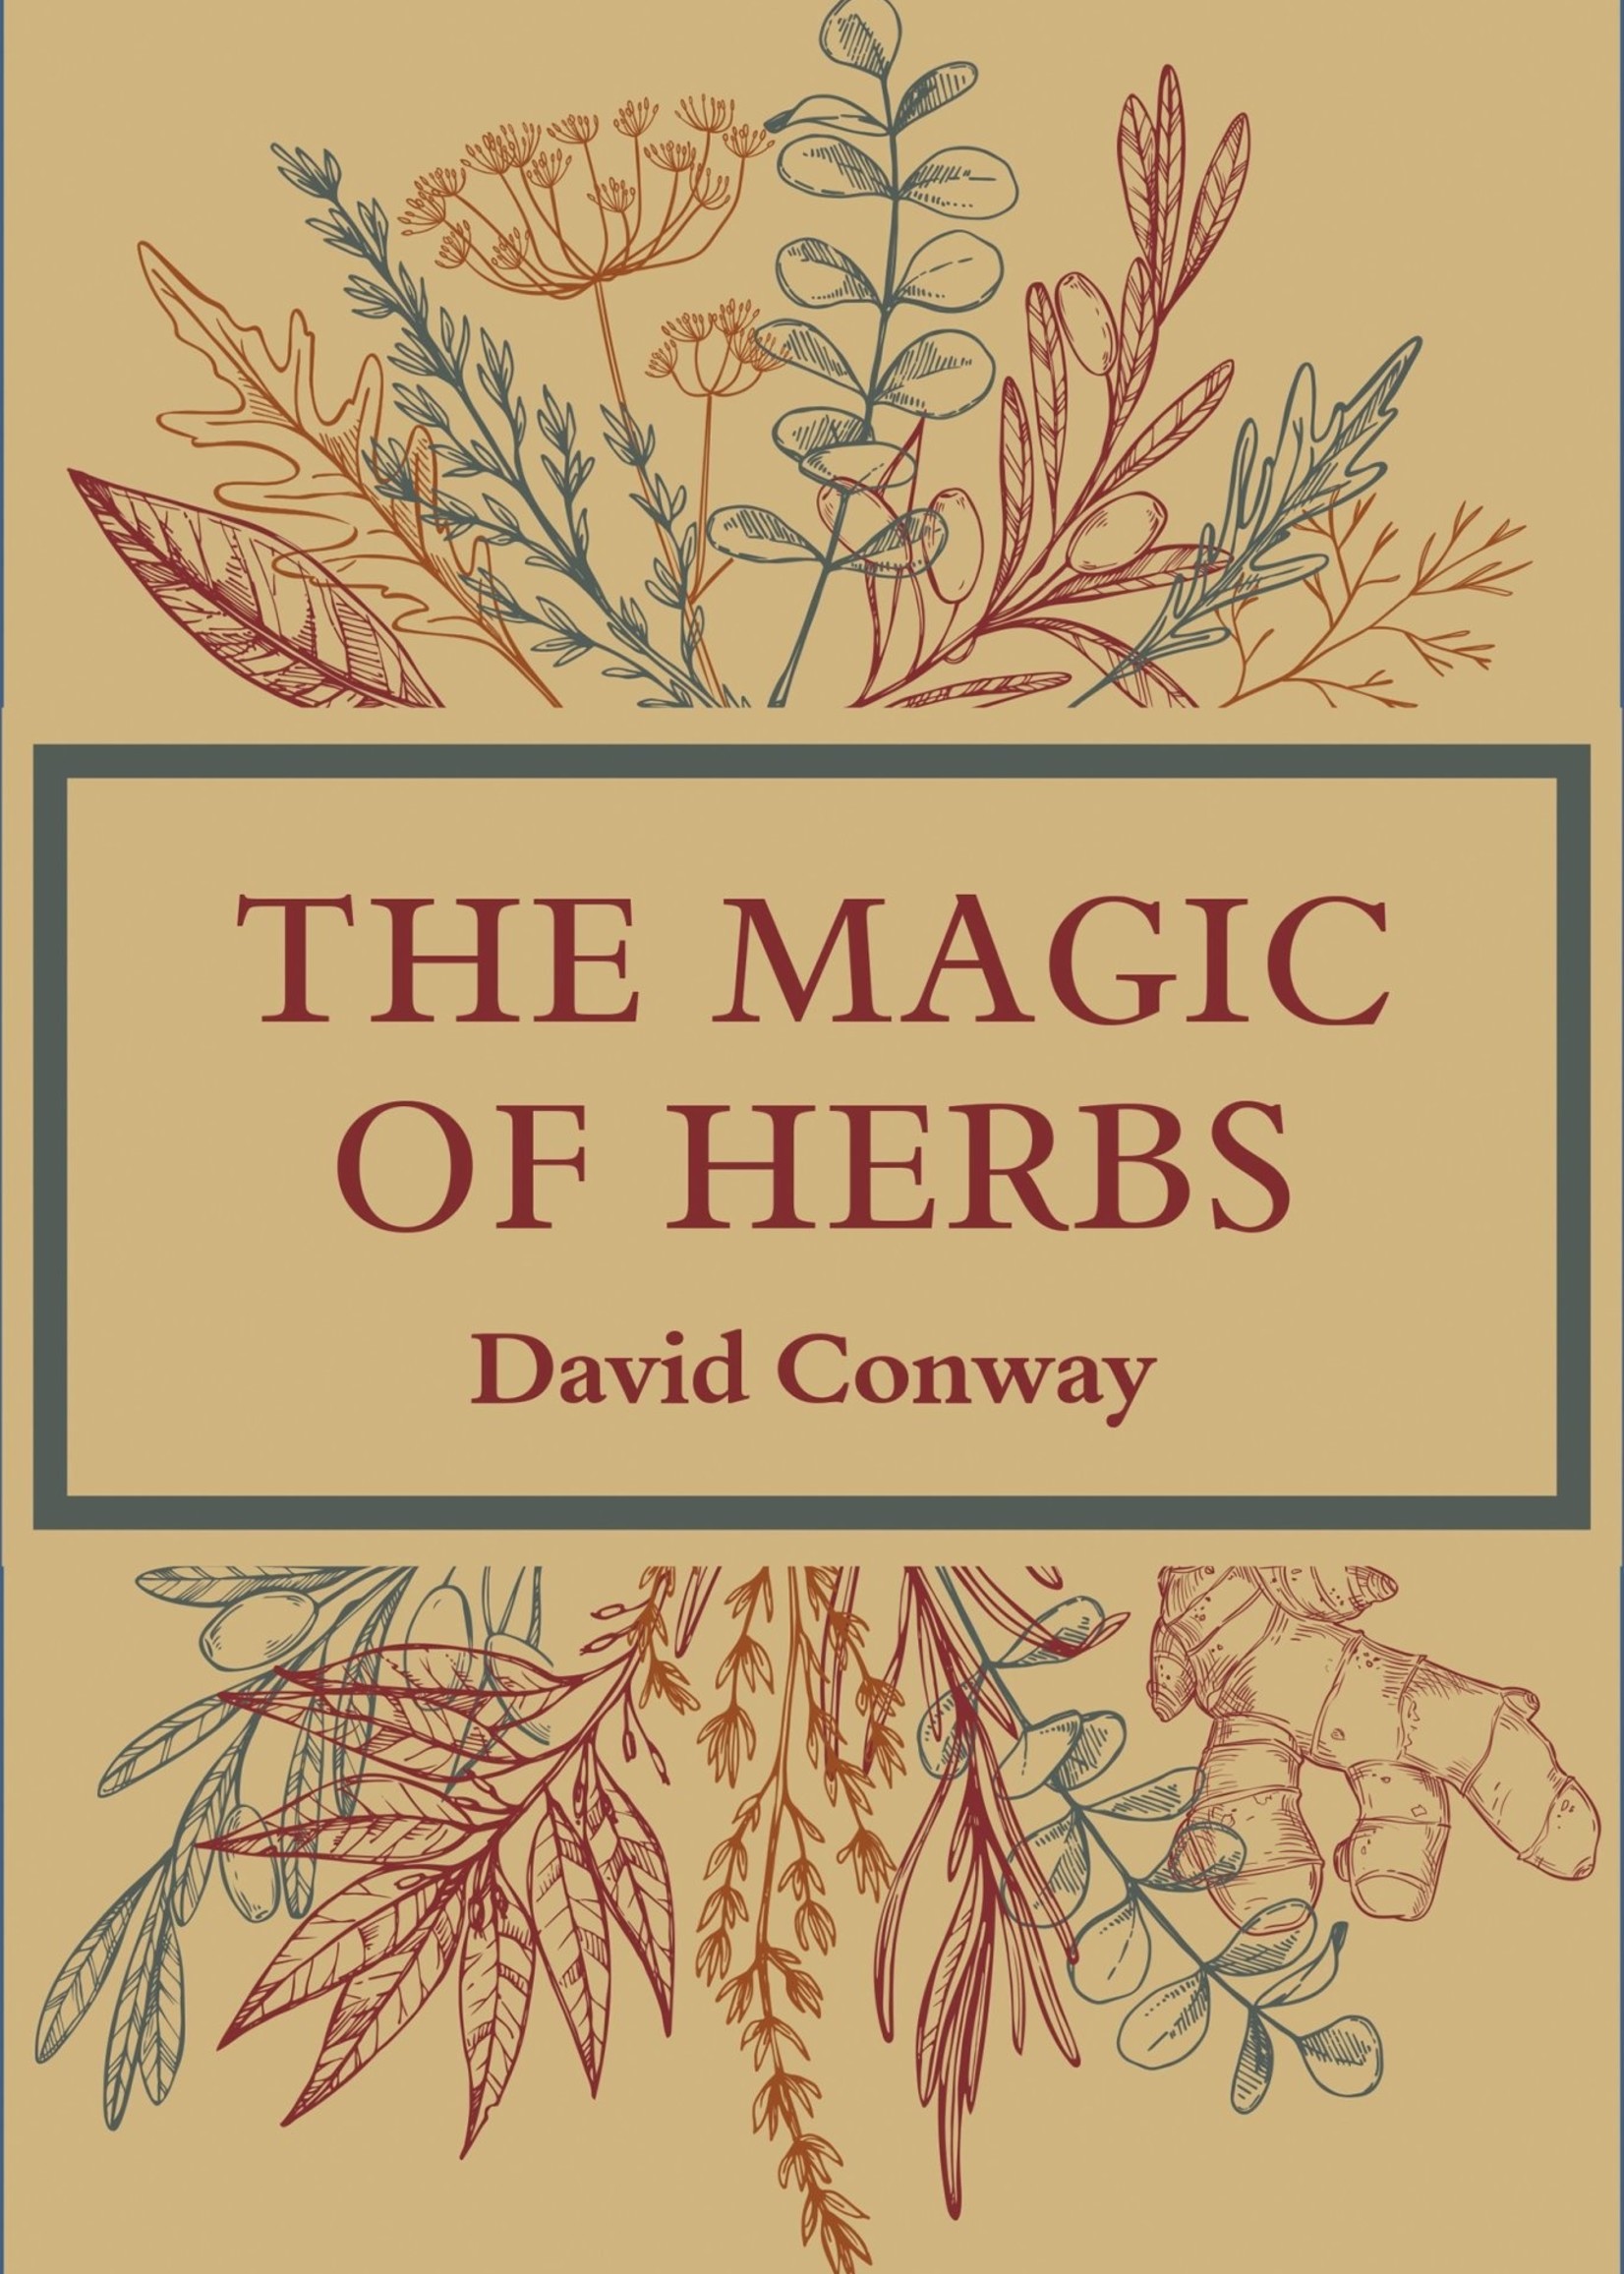 The Magic of Herbs (David Conway)